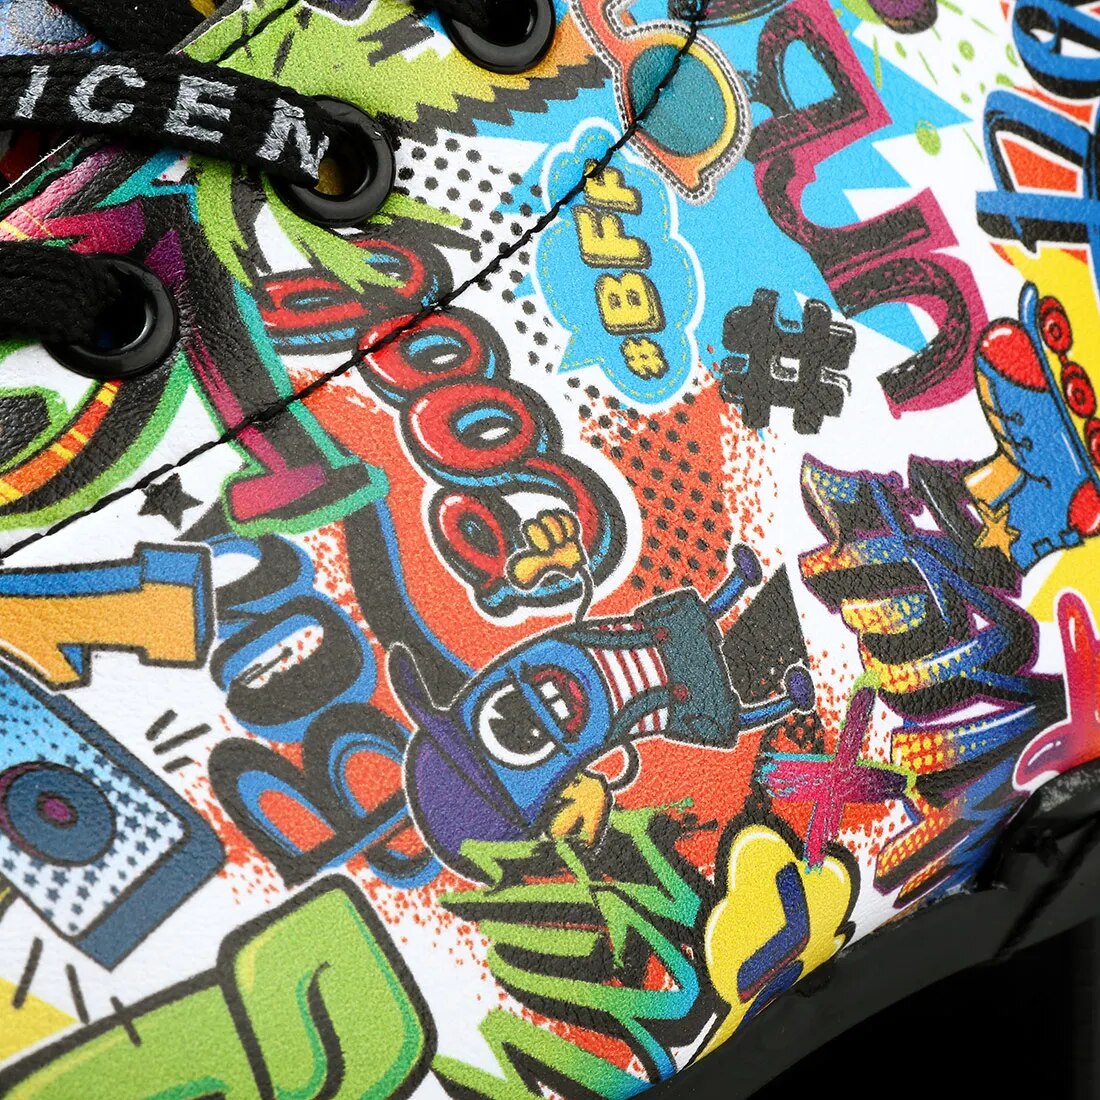 Graffiti Roller Skates Adult Double Row Skates Microfiber Leather